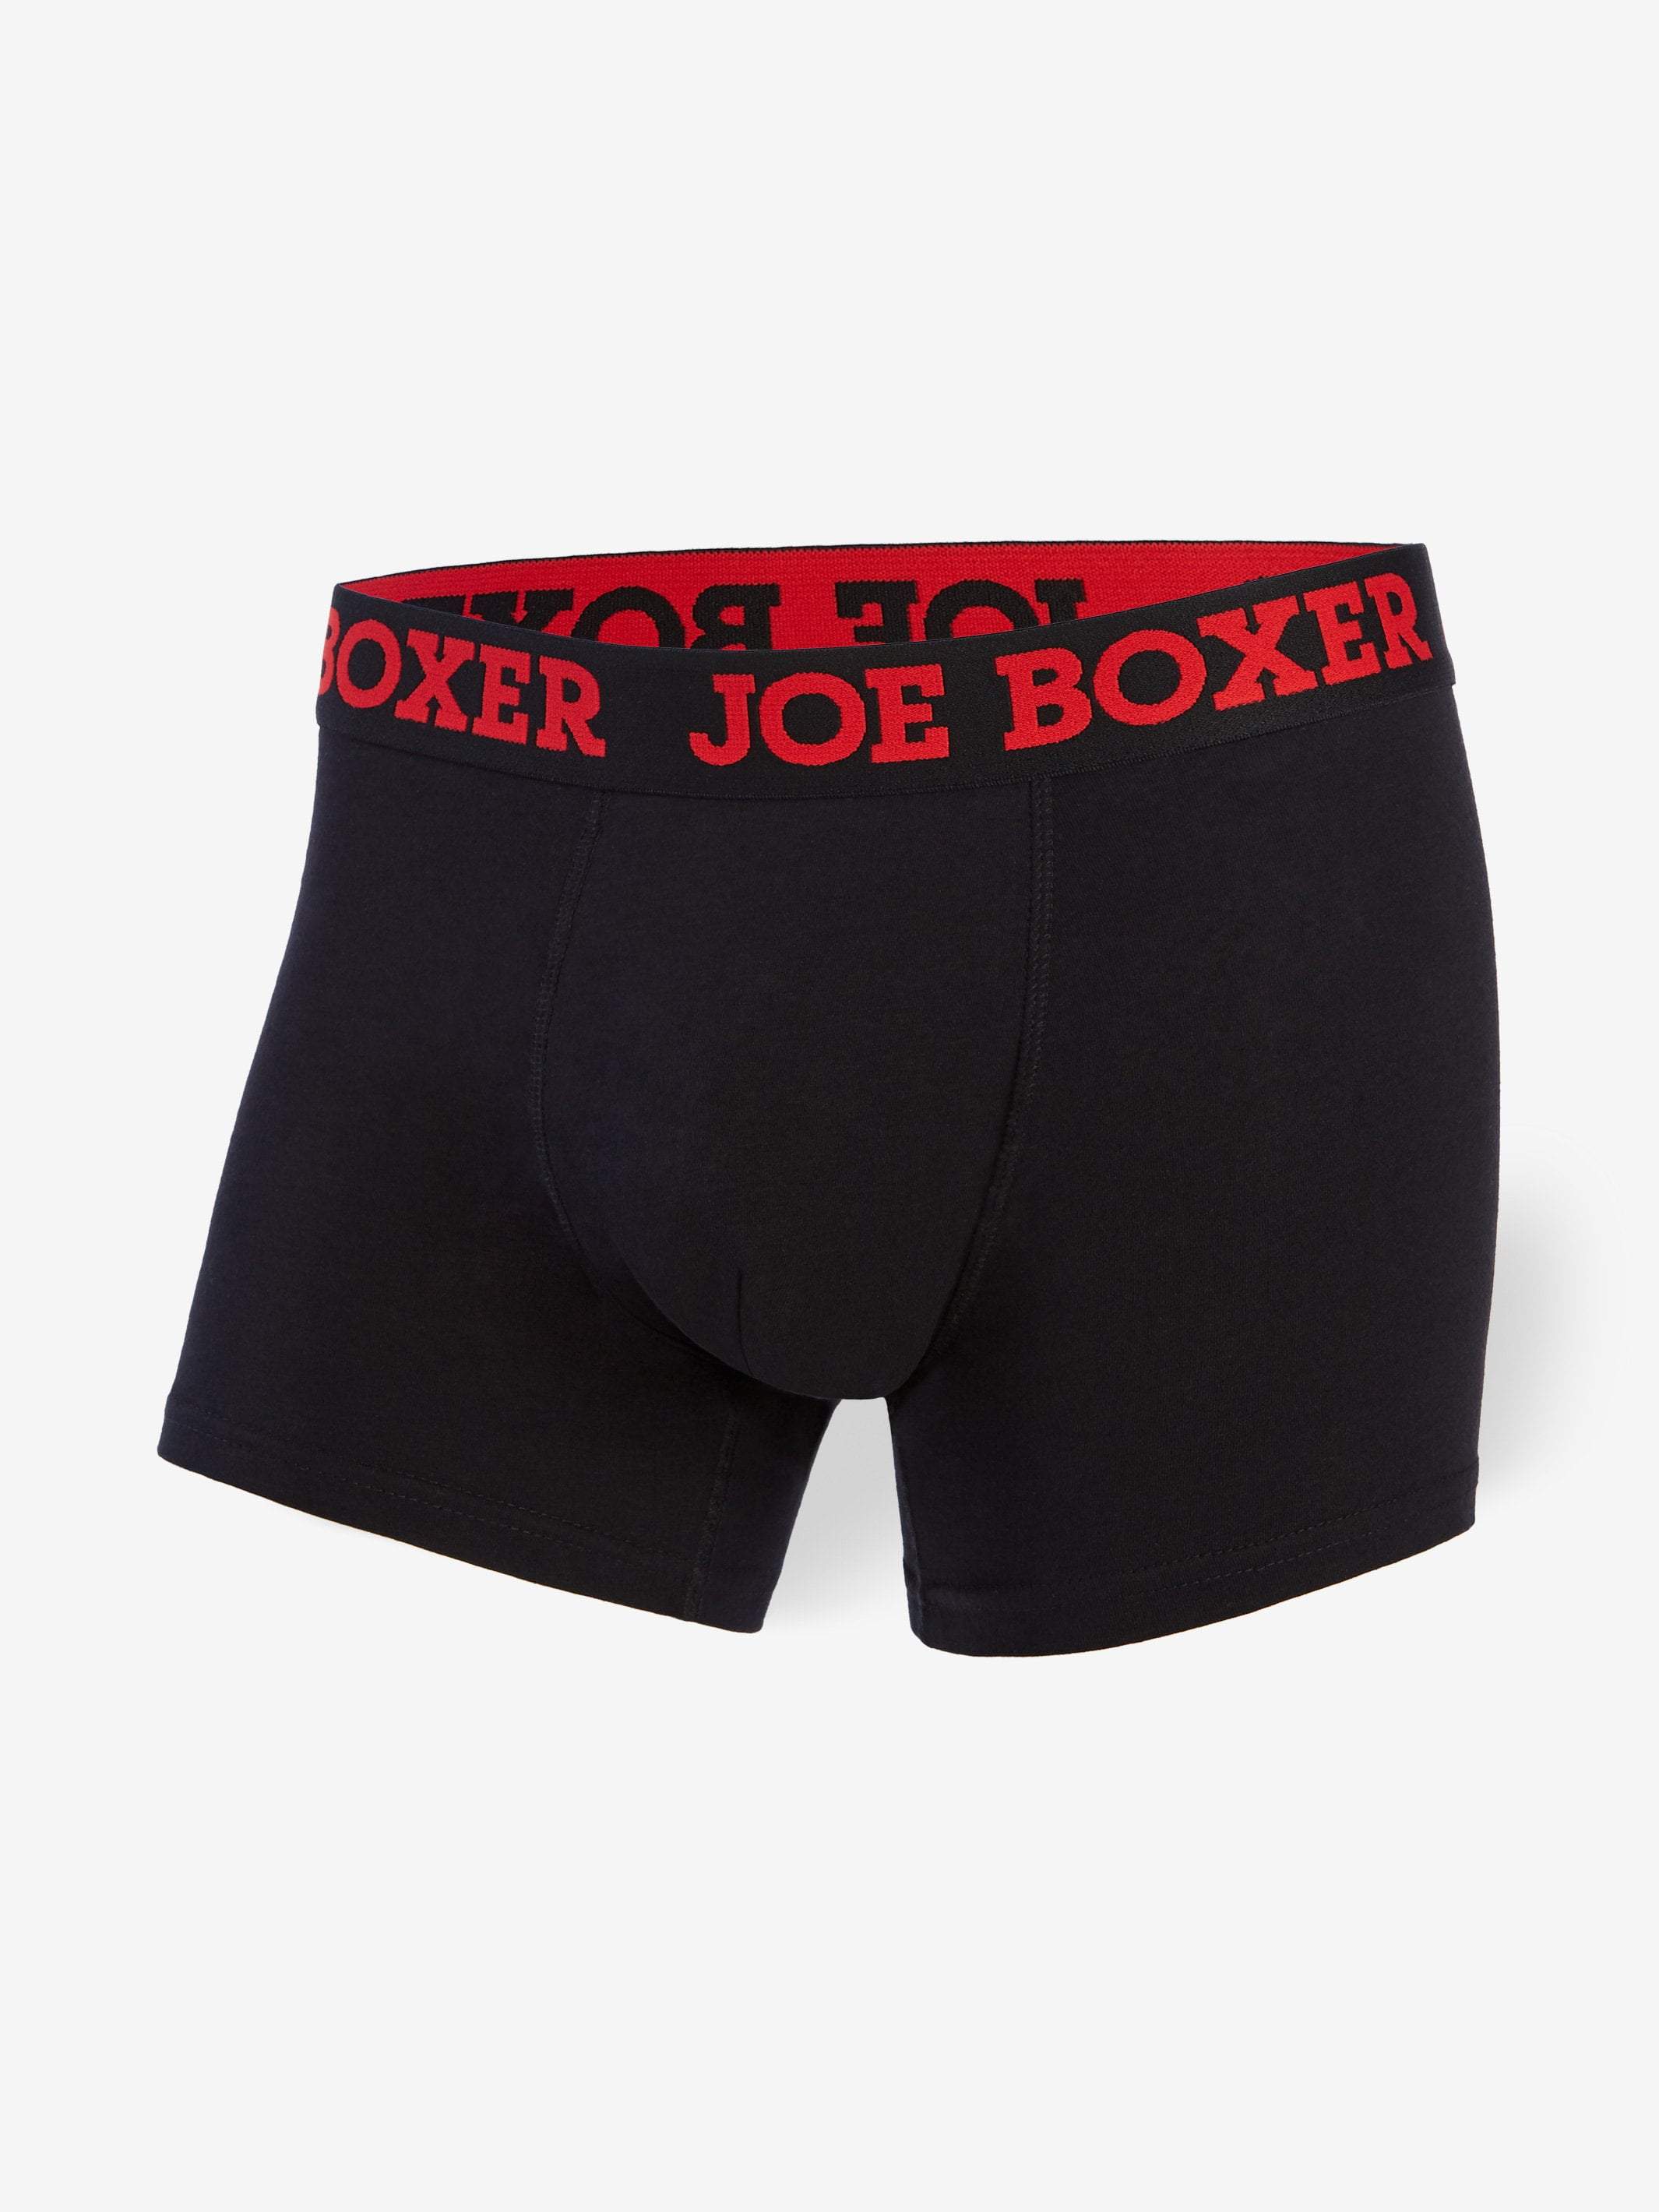 Men's Trunks  Joe Boxer Canada